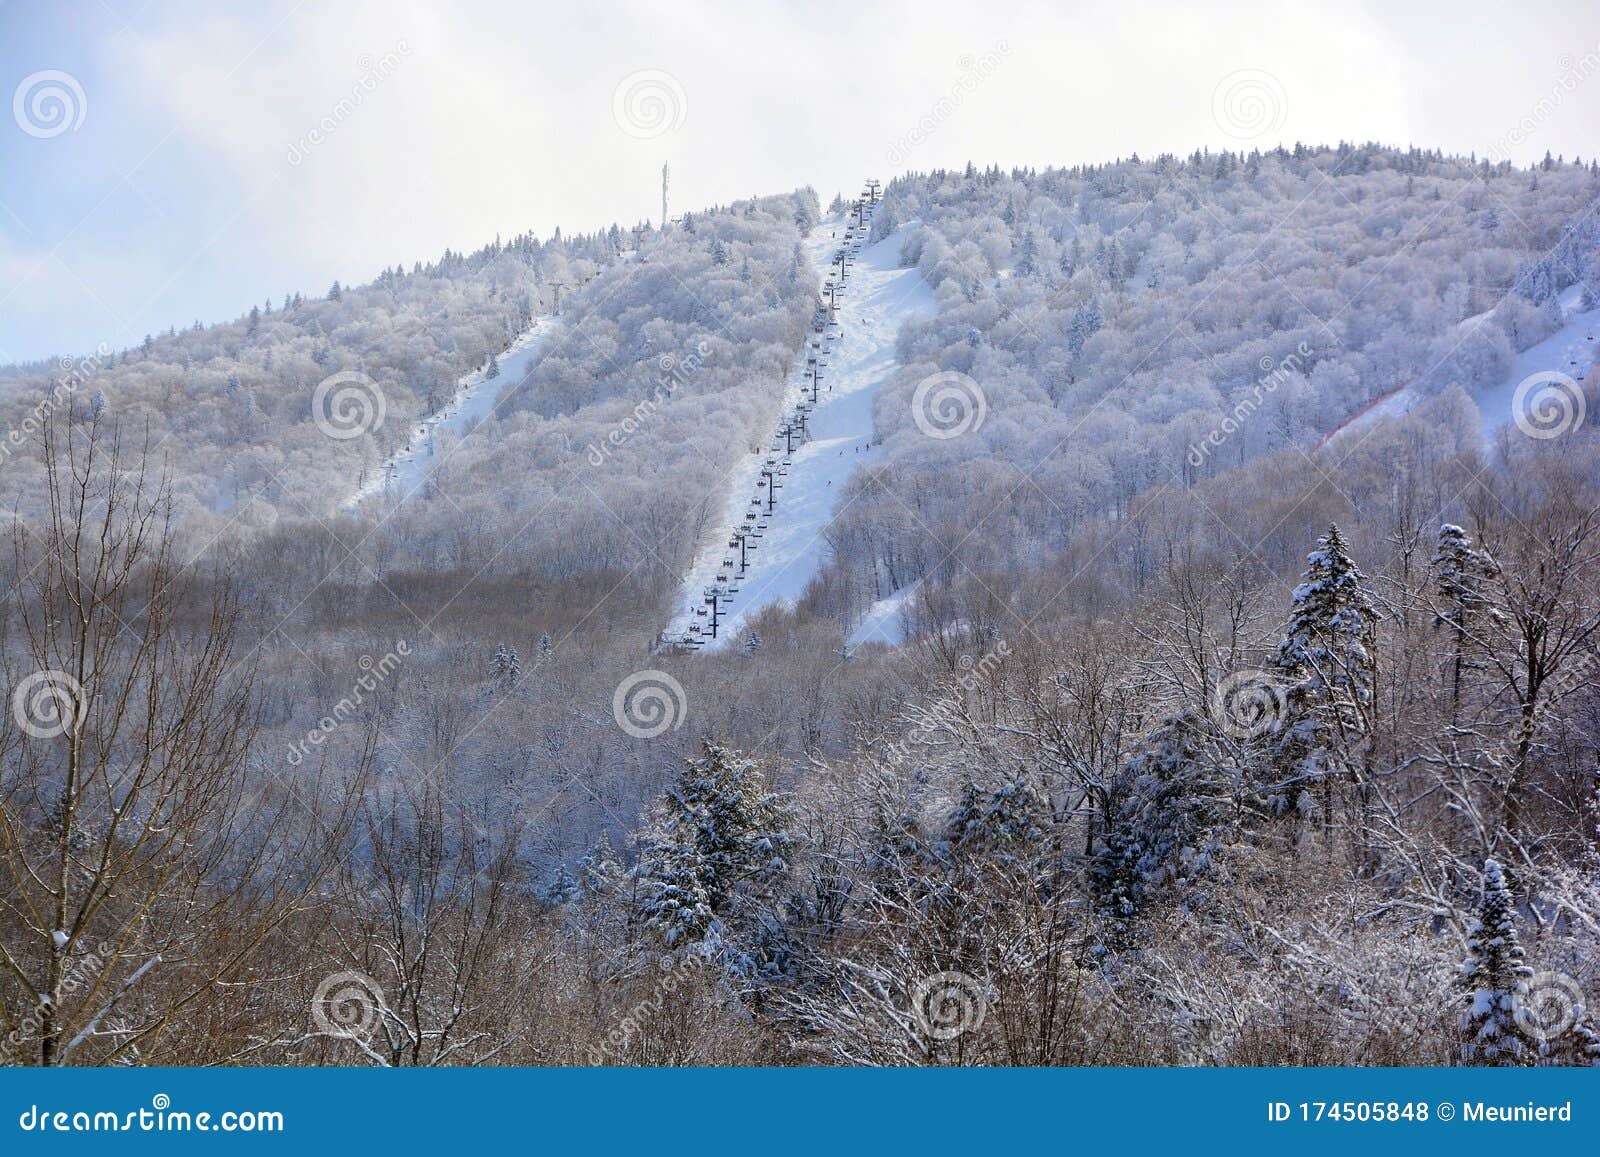 winter landscape in sutton mountain